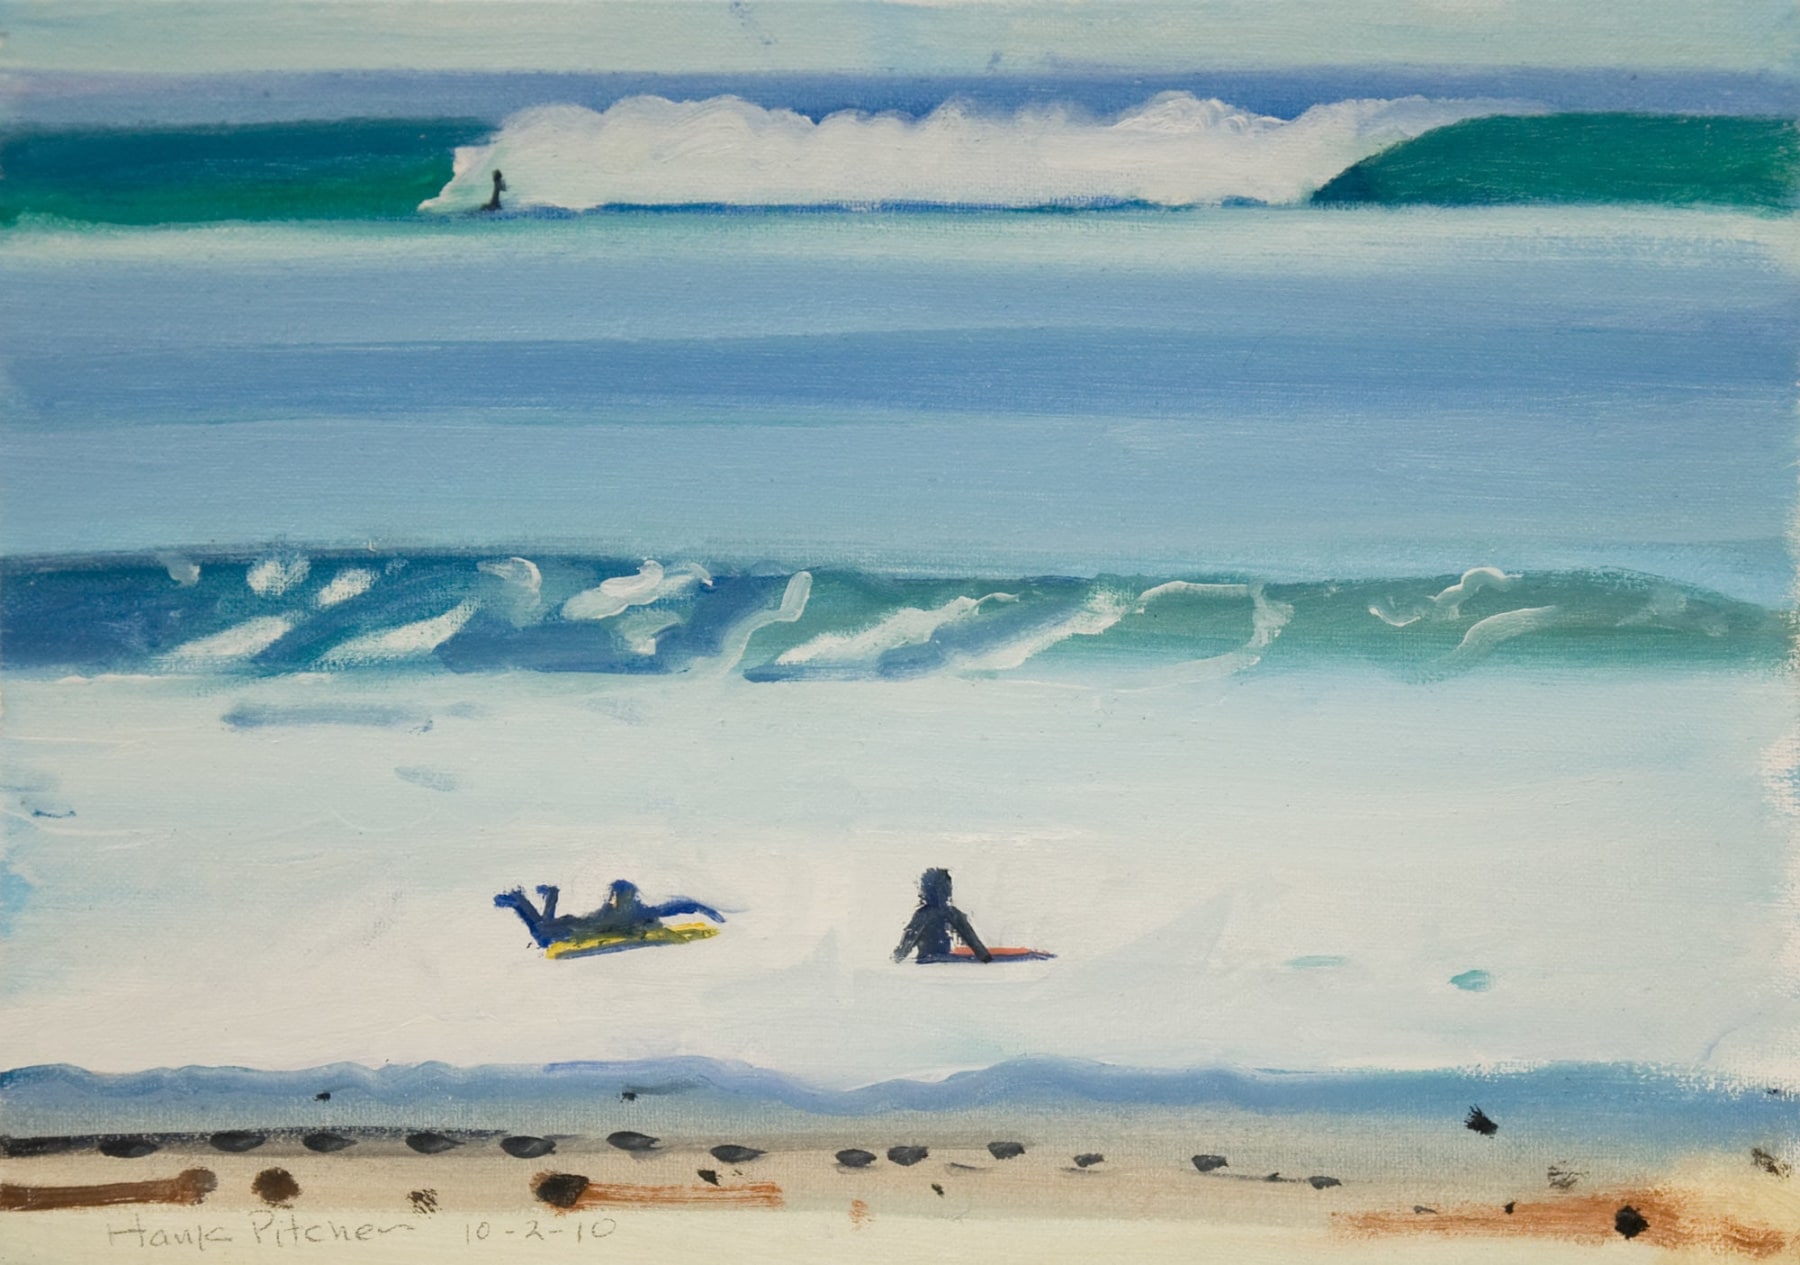 HANK PITCHER (b. 1949), 3 Surfers, 2010